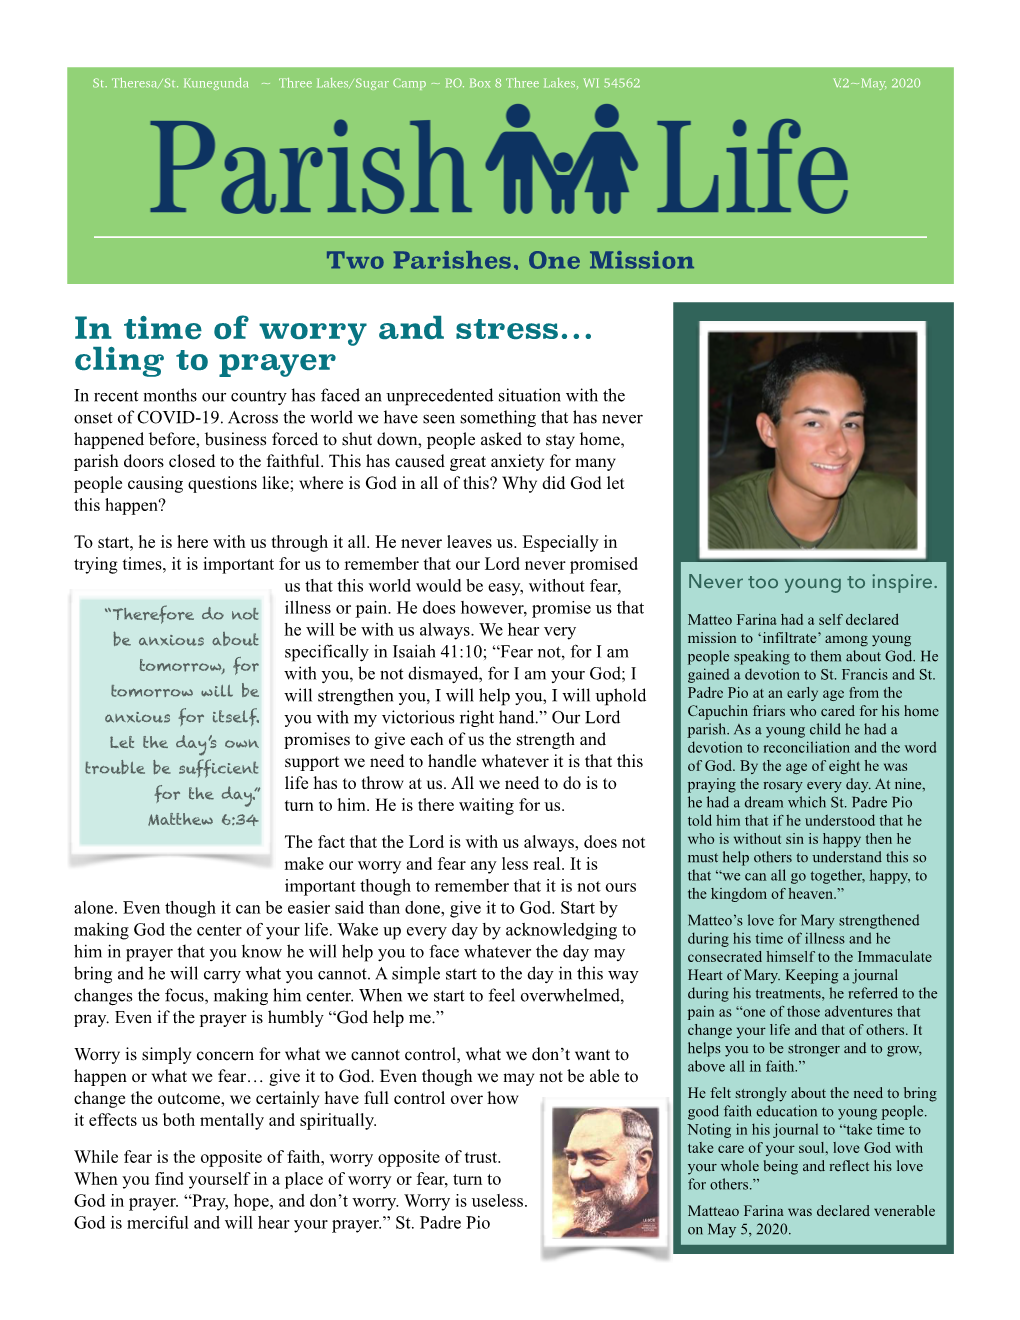 Parish Life Vol 2 ~ May 2020